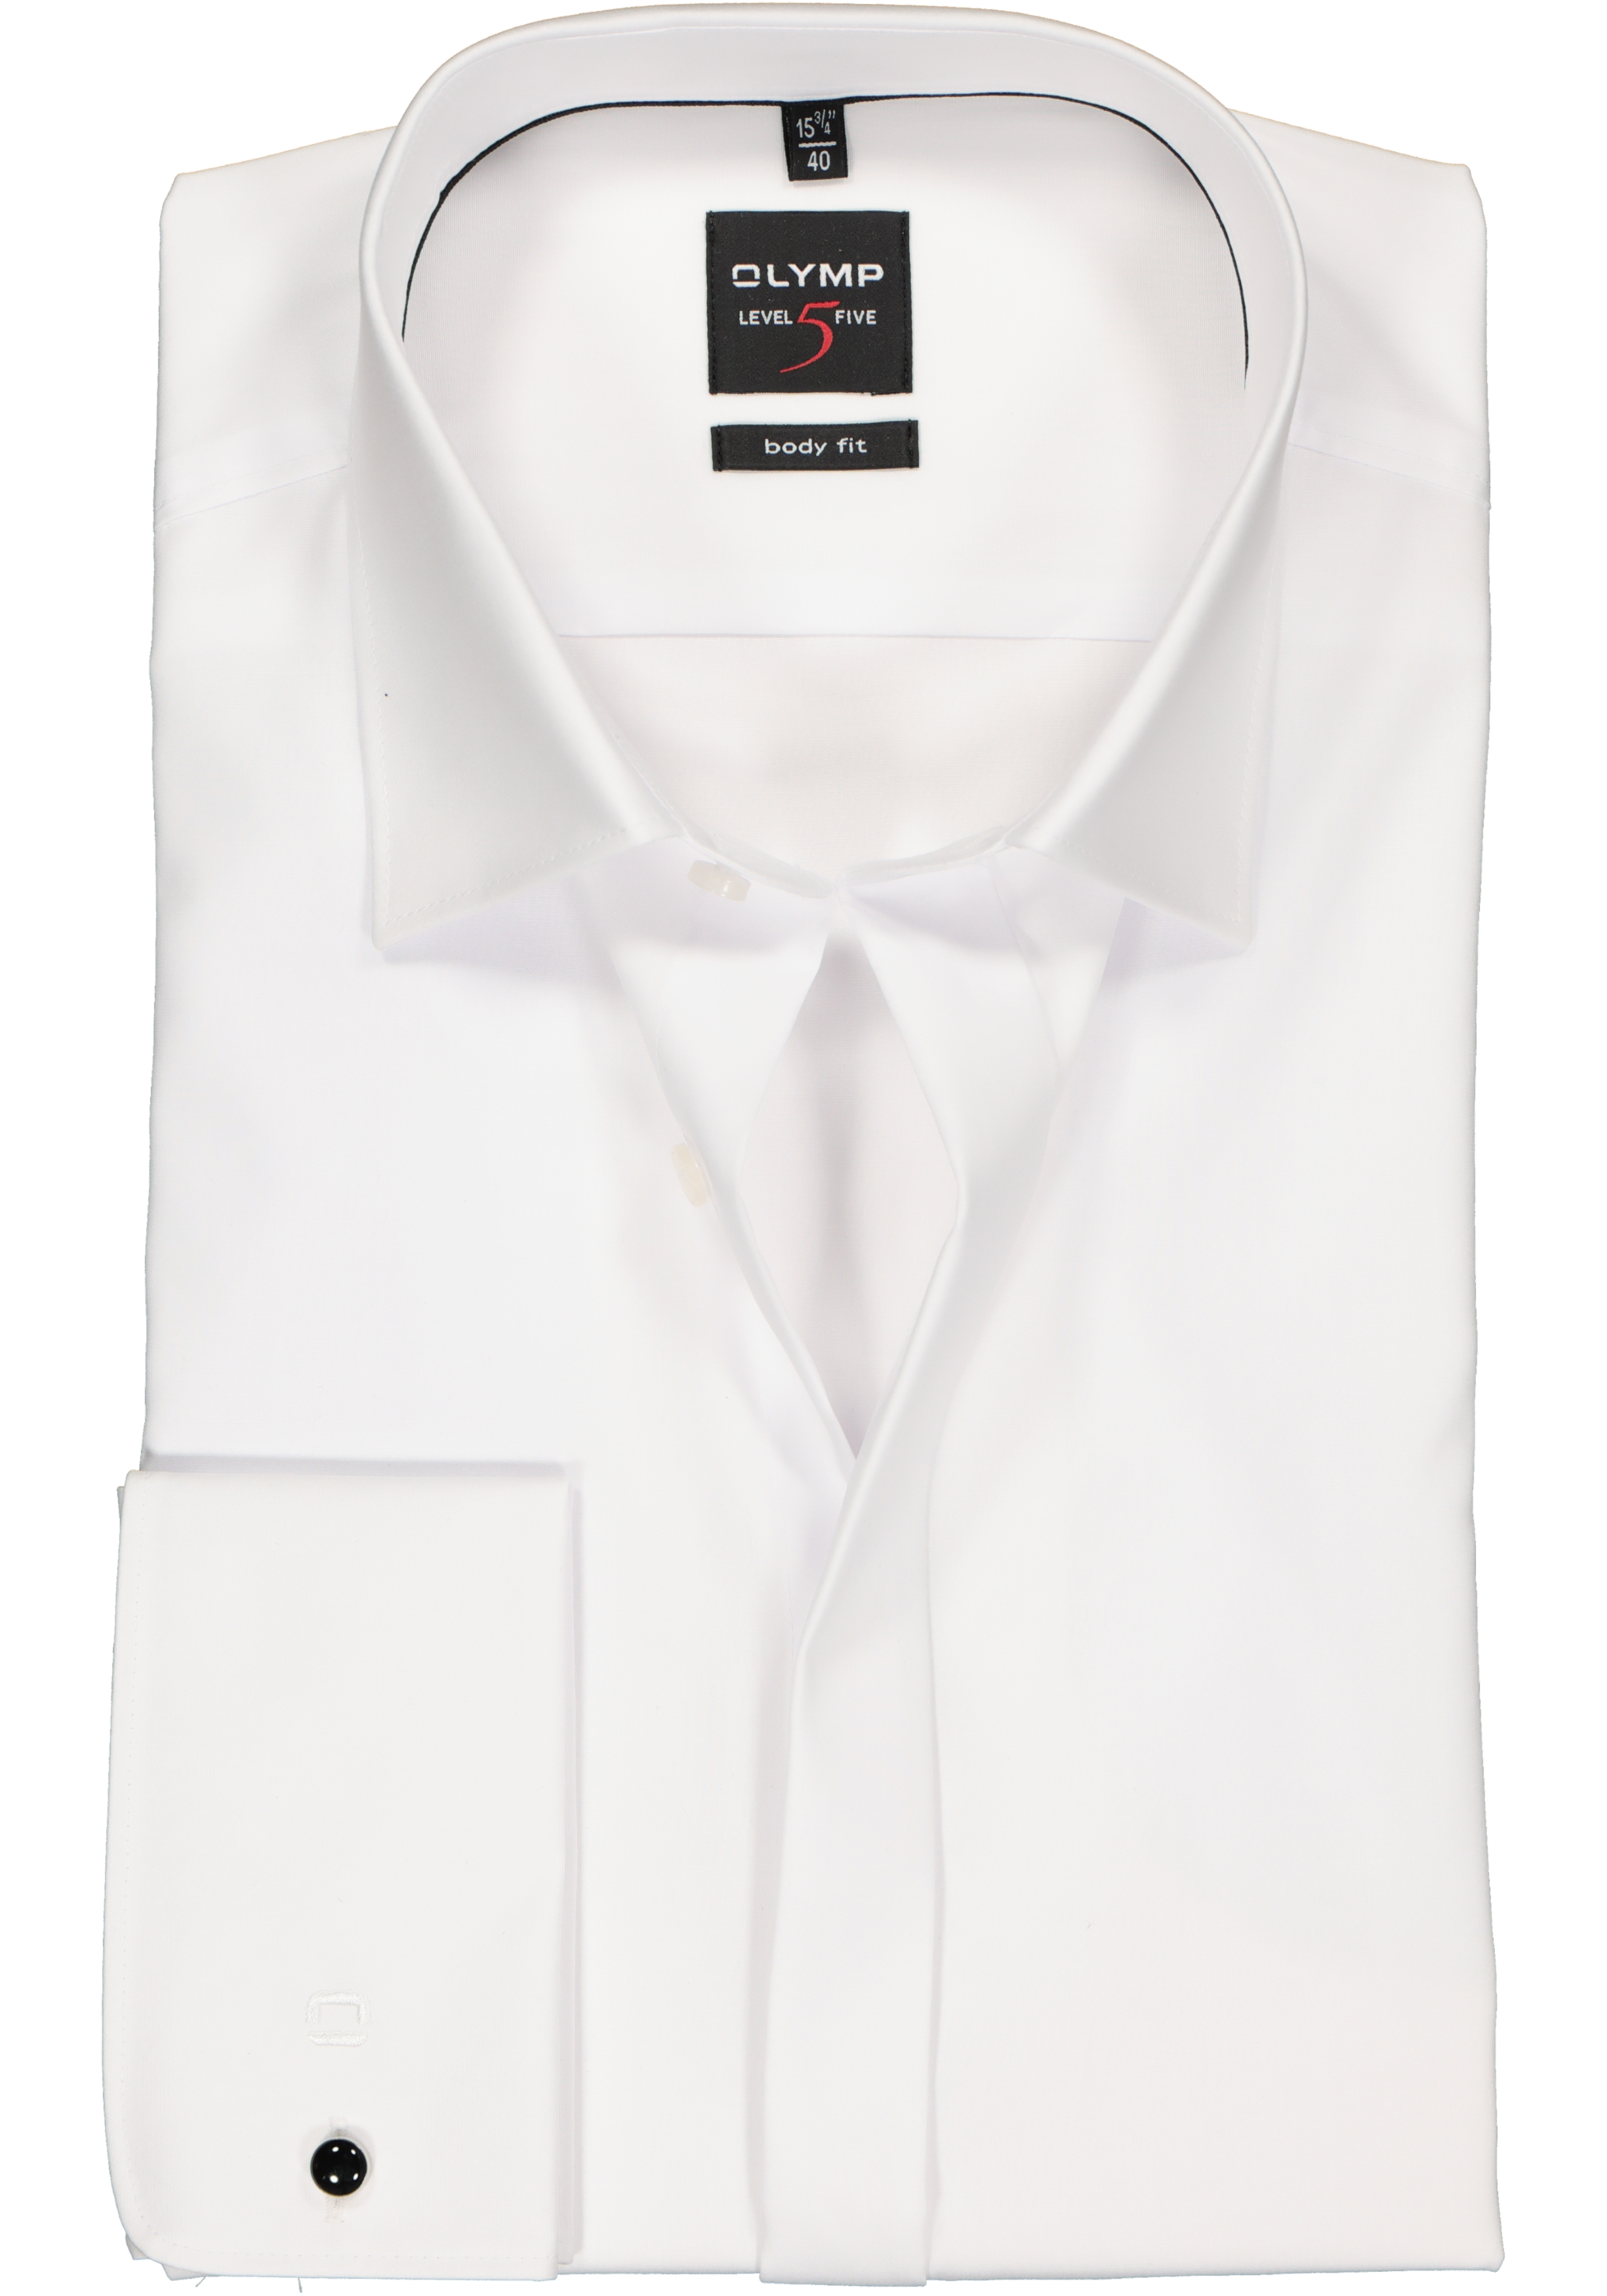 OLYMP Level 5 body fit overhemd, mouwlengte 7, smoking overhemd, wit gladde stof met Kent kraag